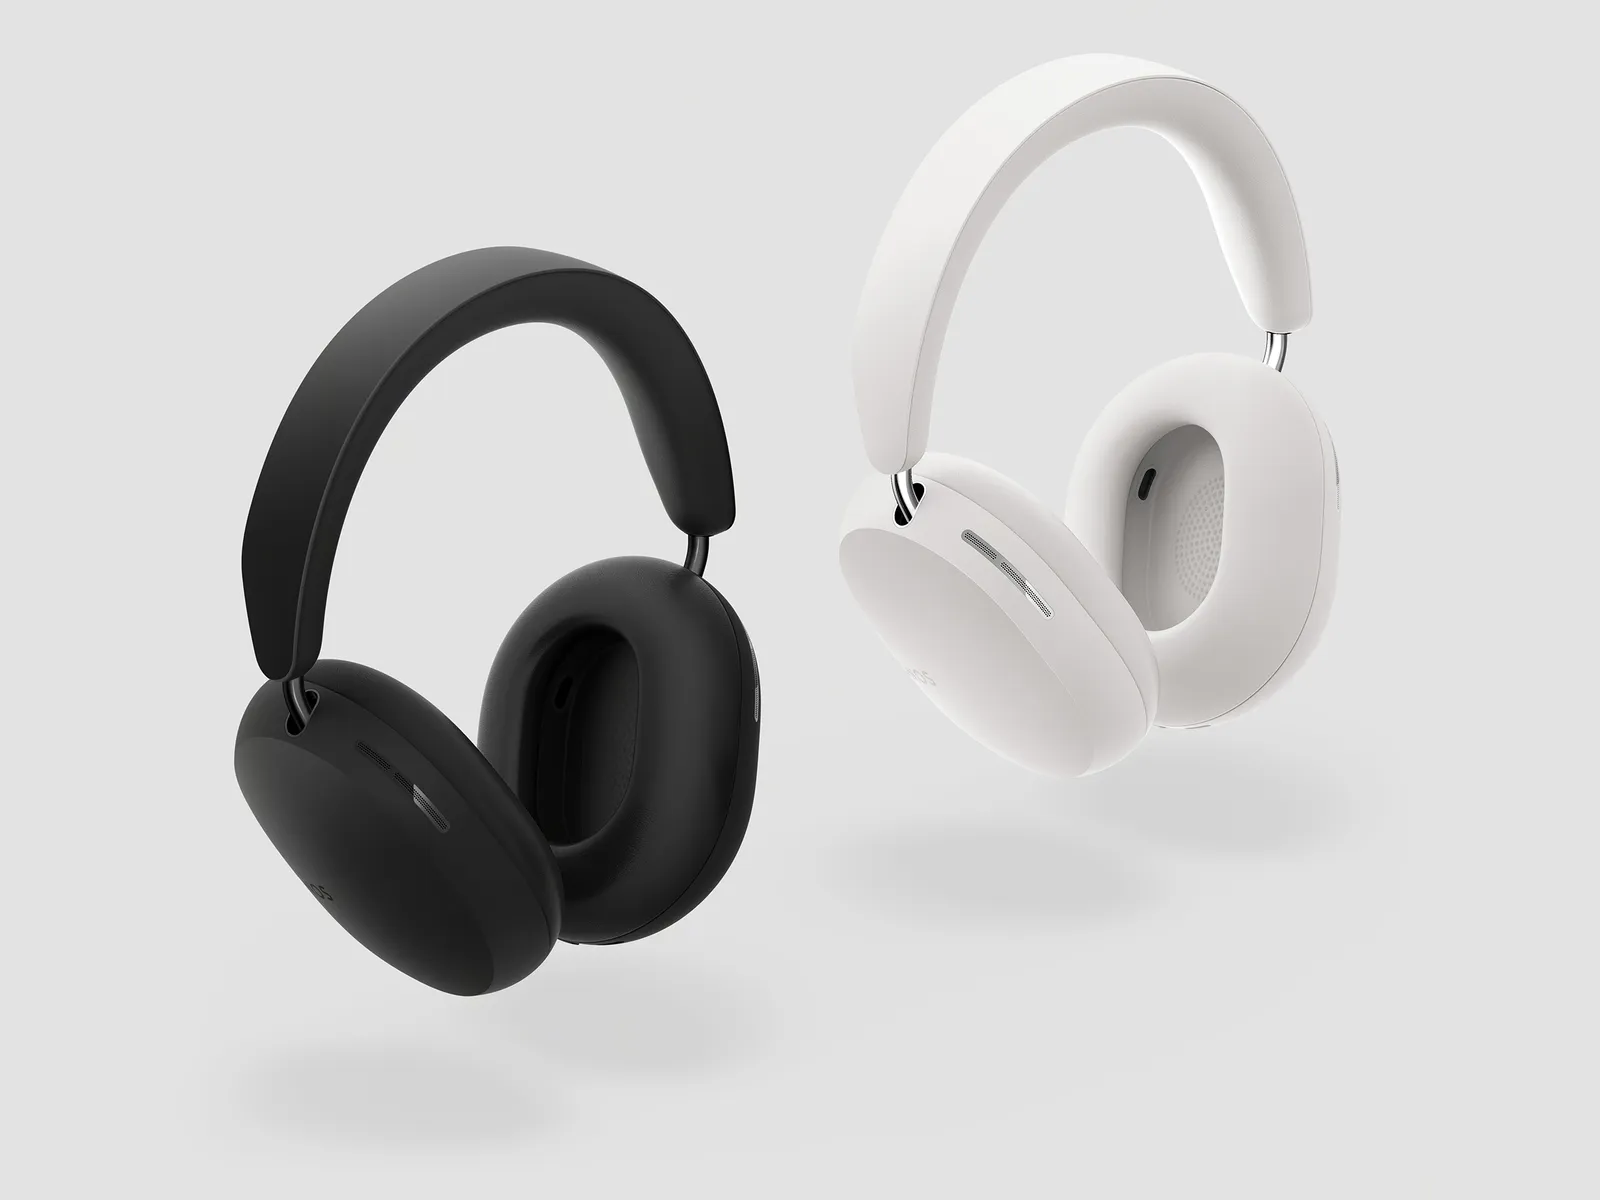 Sonos-Ace-Wireless-Headphones-Side-Black-White